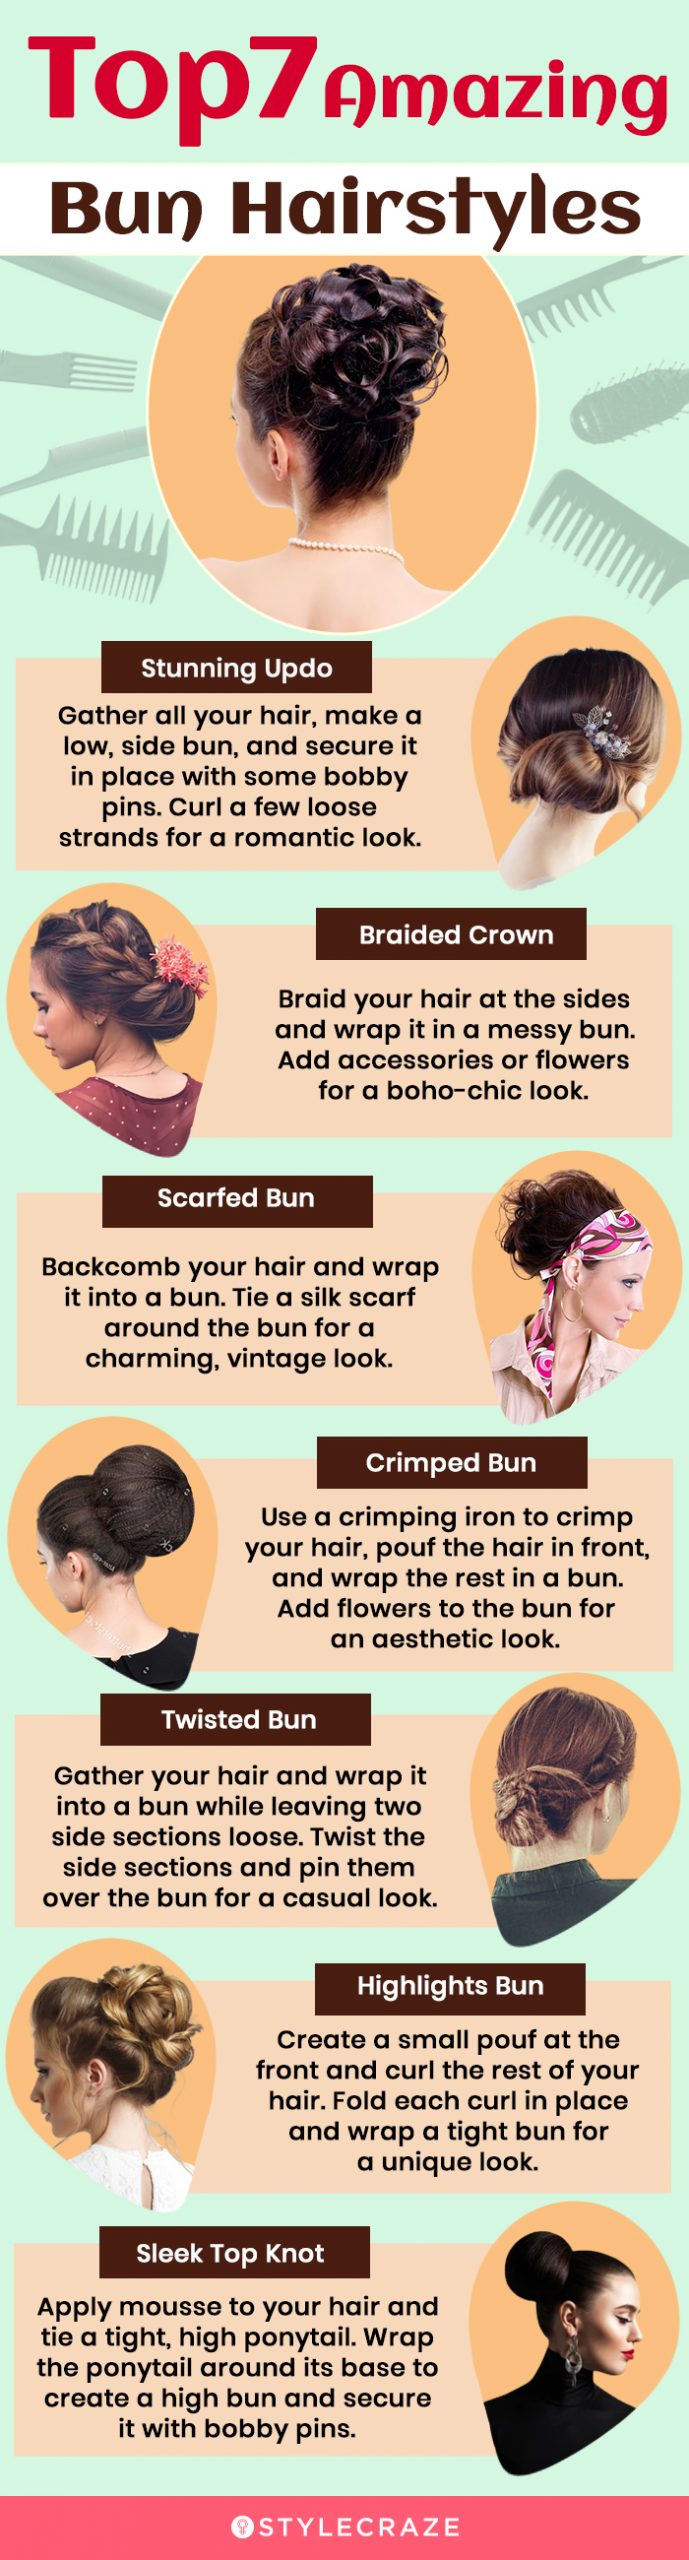 top 7 amazing bun hairstyle (infographic)